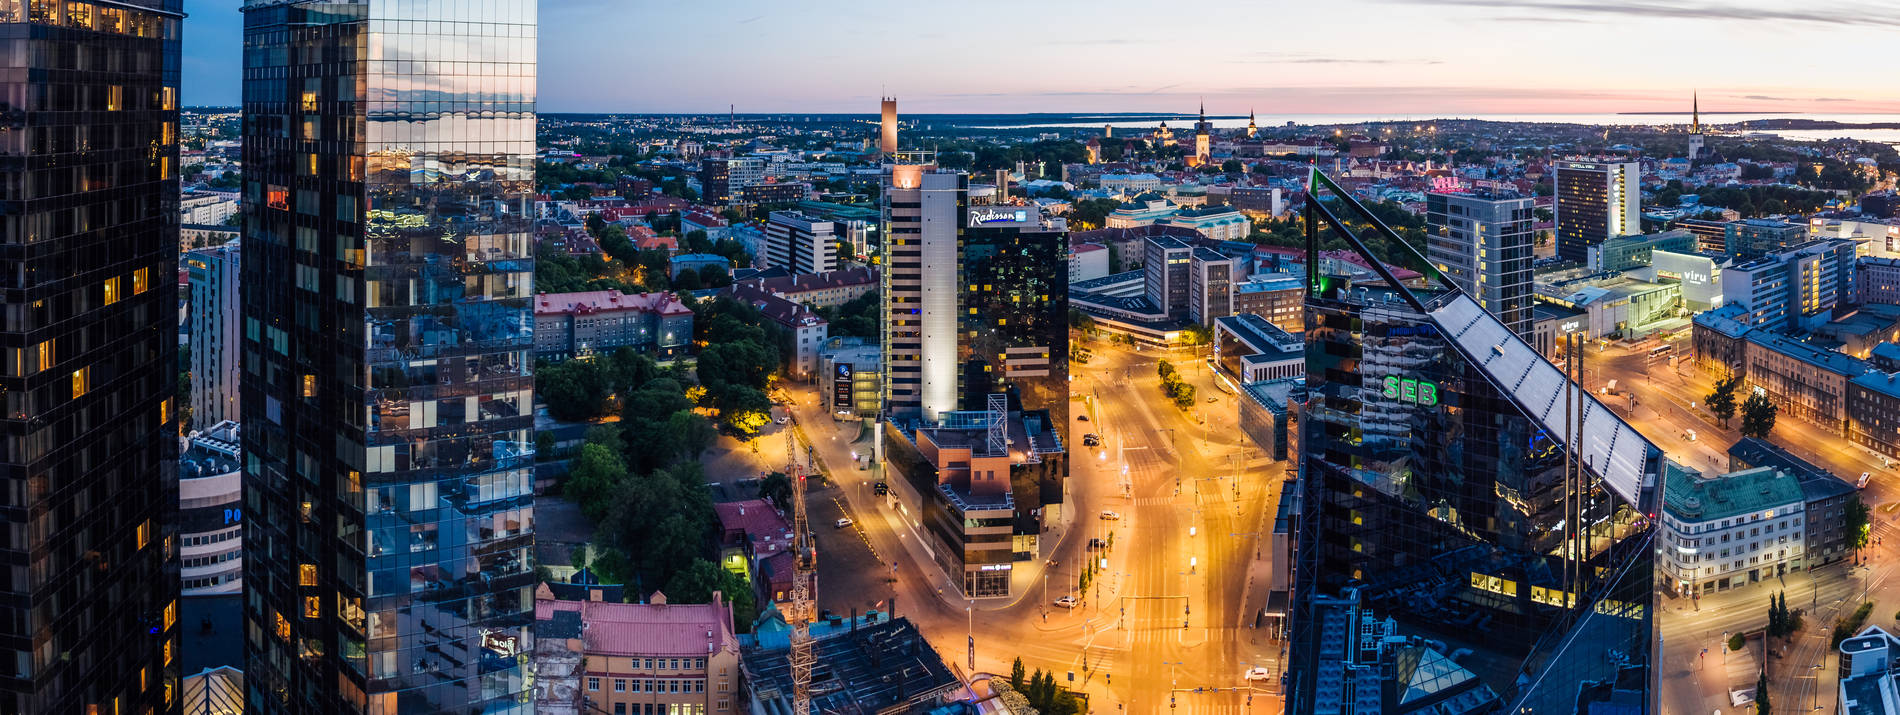 City Centre Visit Tallinn